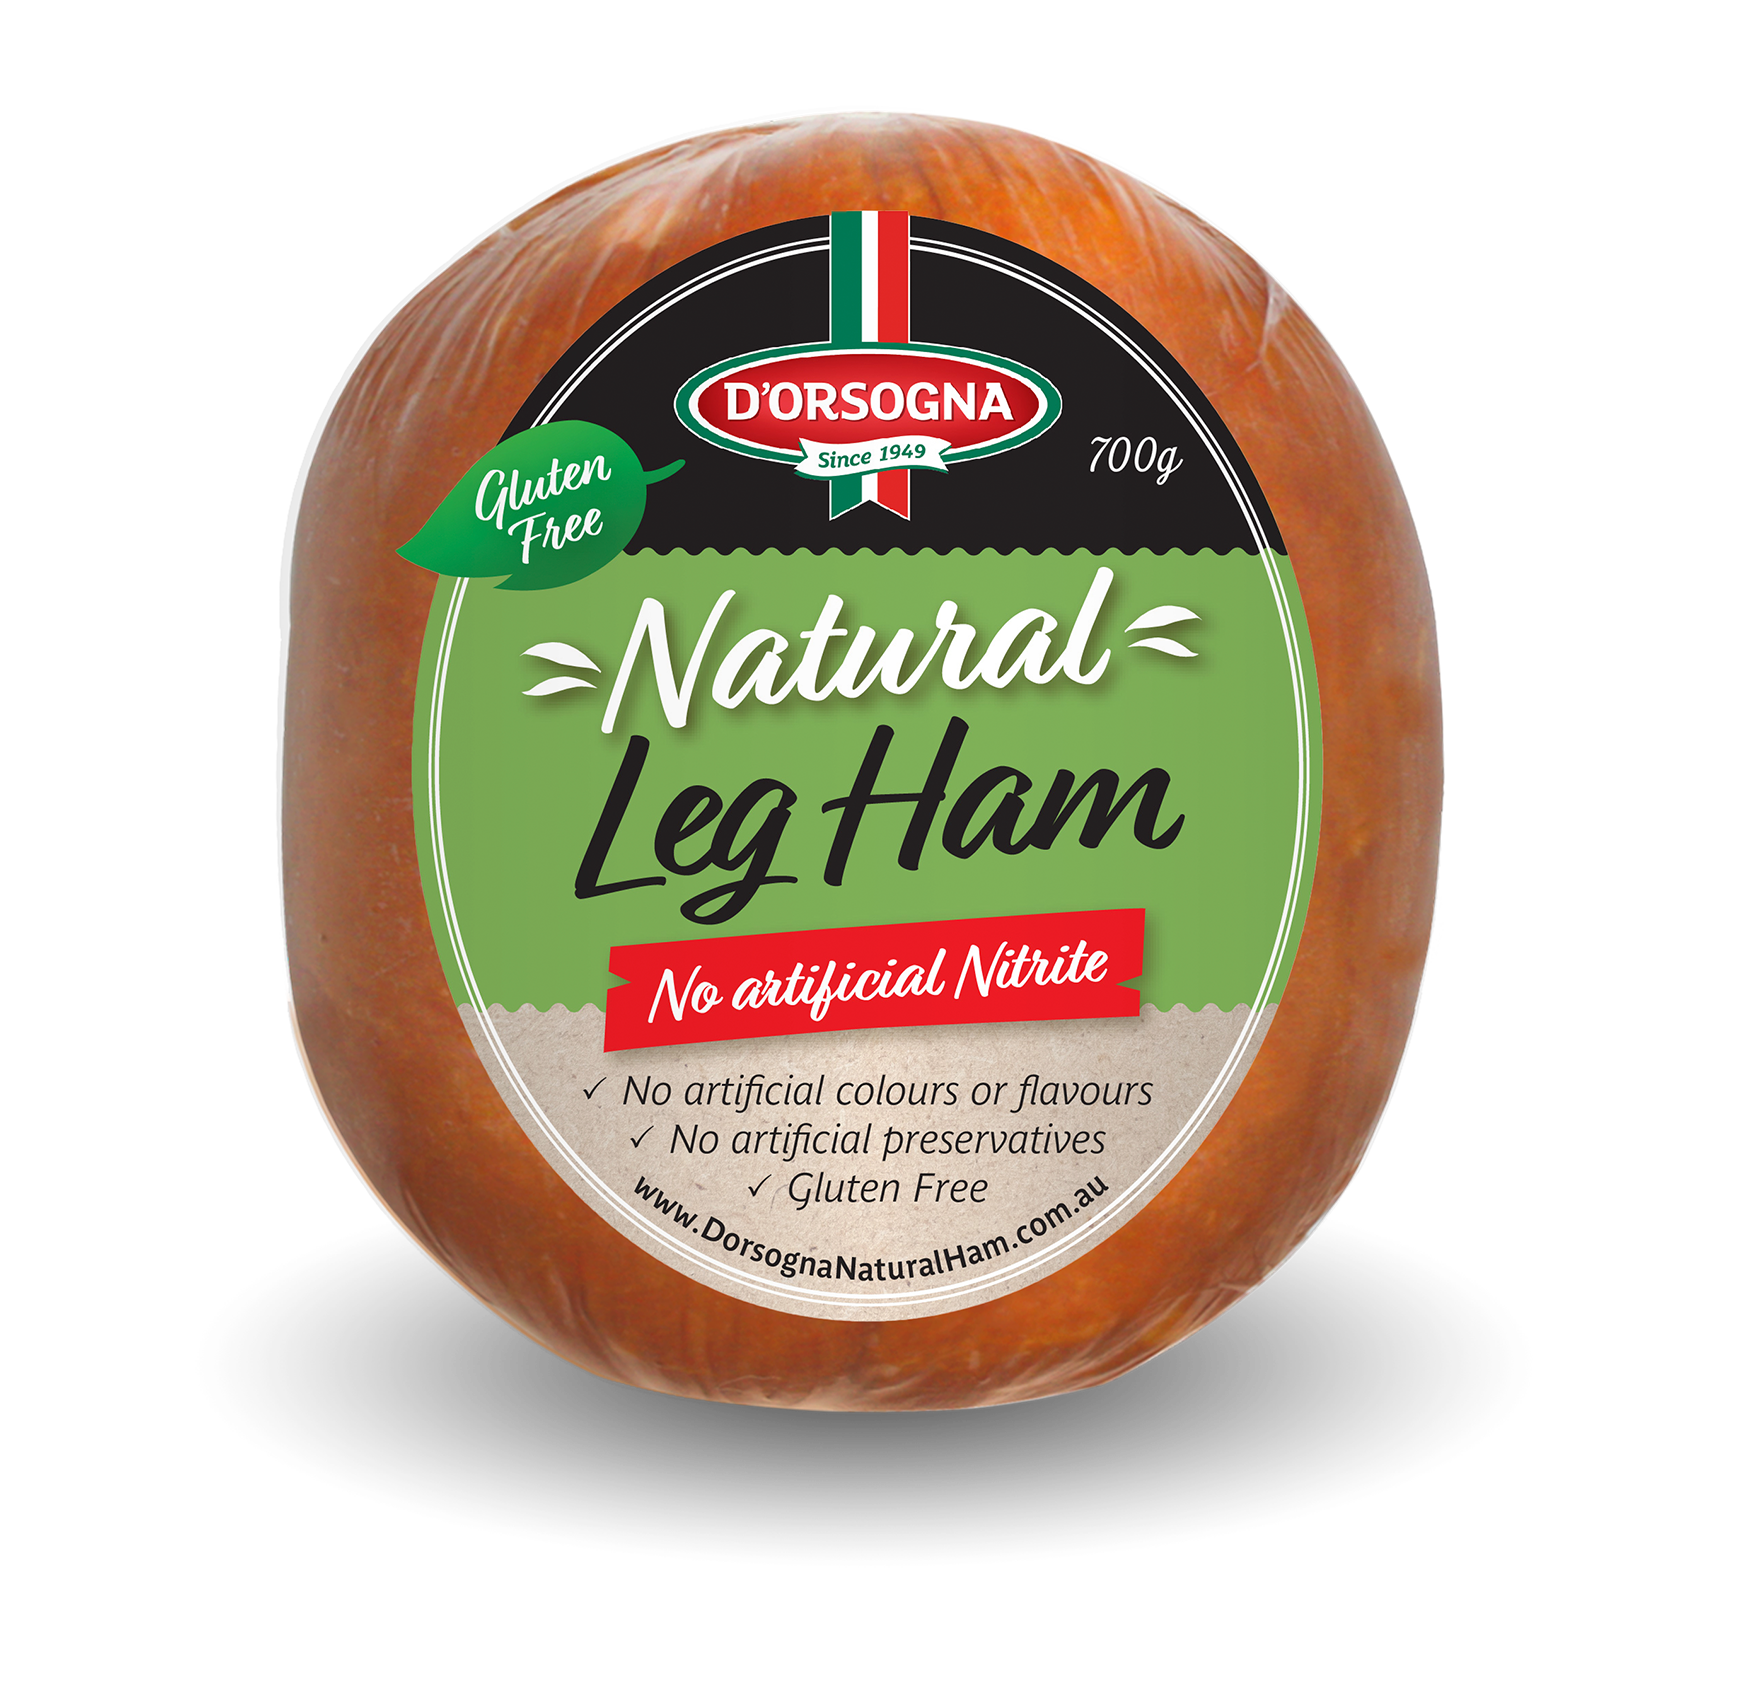 Natural Leg Ham 700g